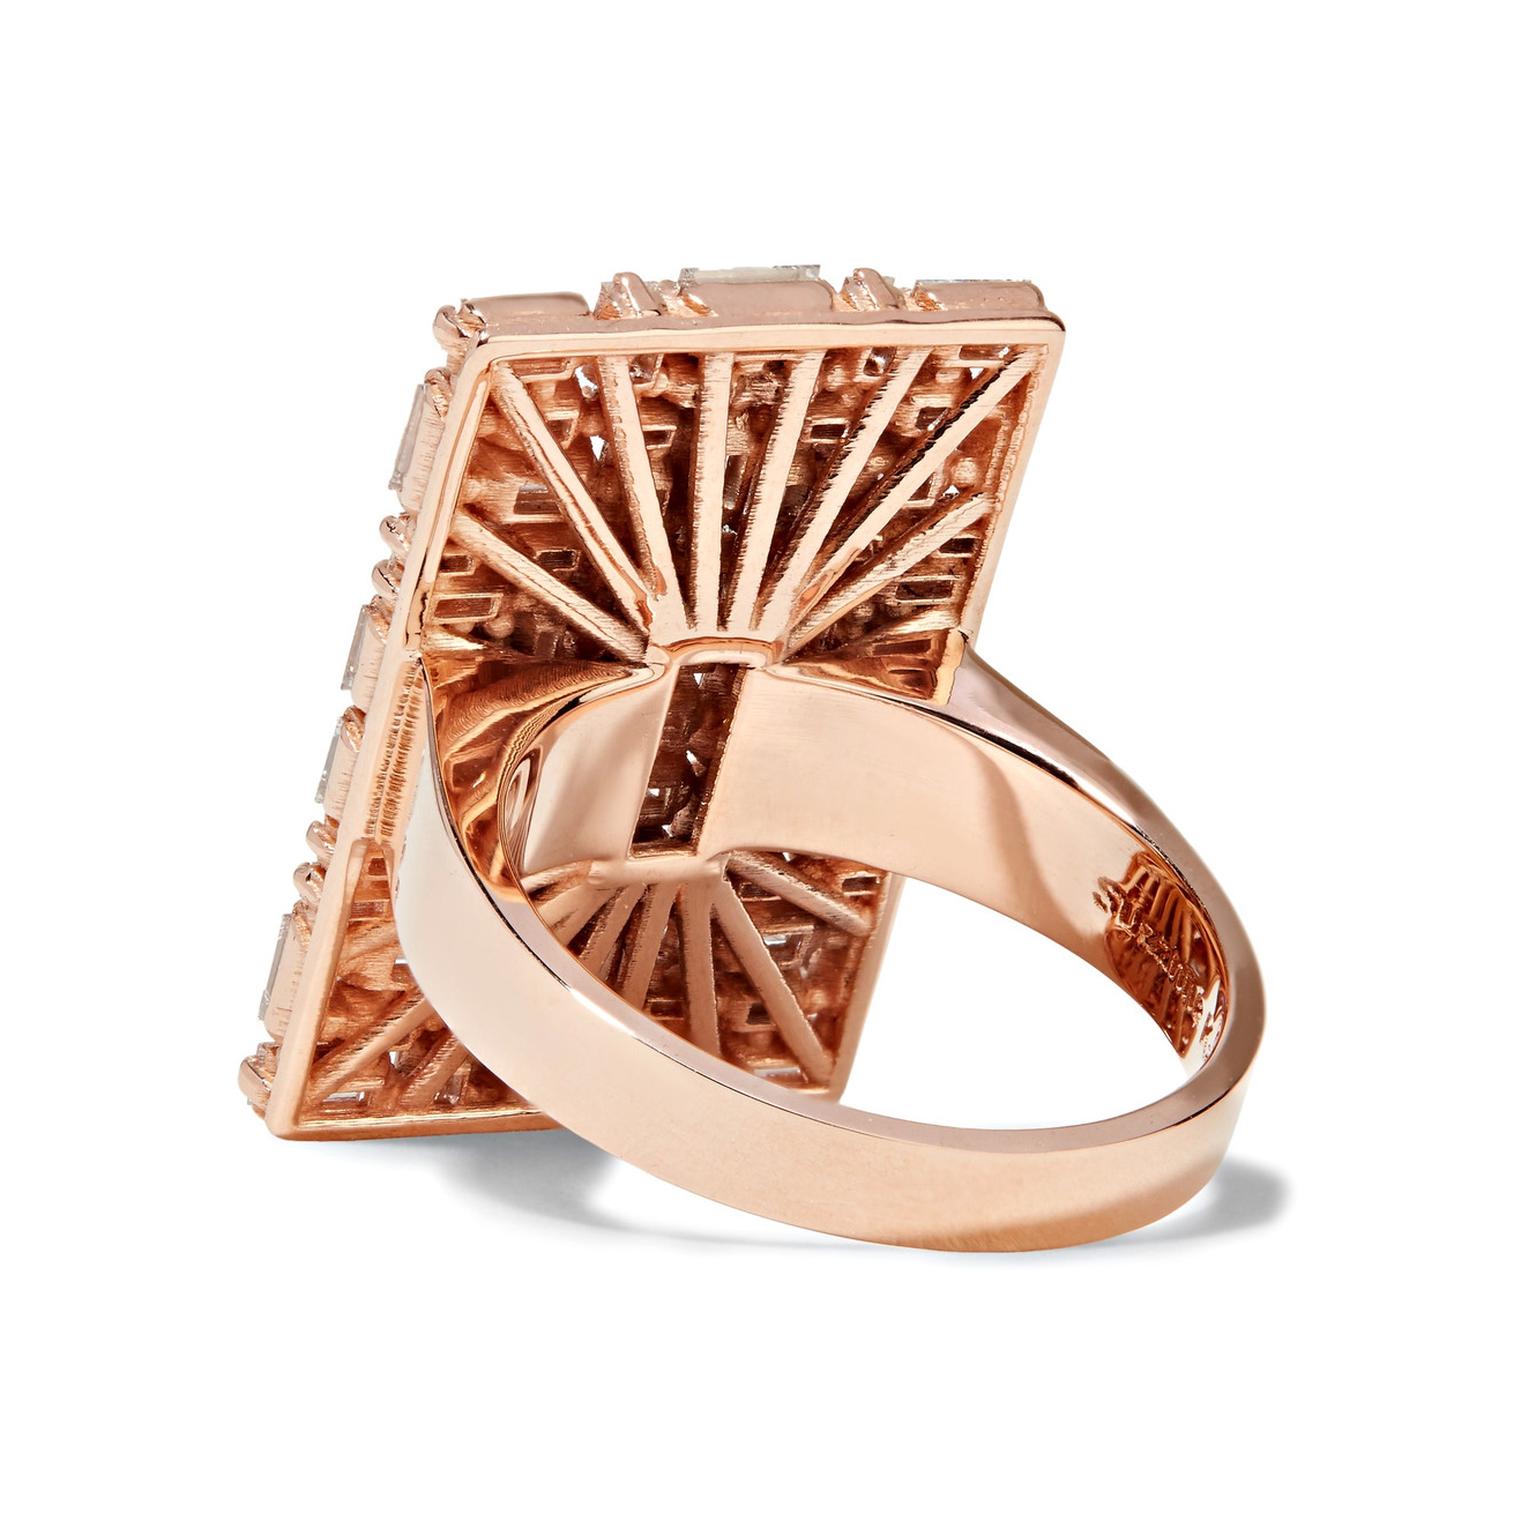 Suzanne Kalan rose gold and diamond ring reverse